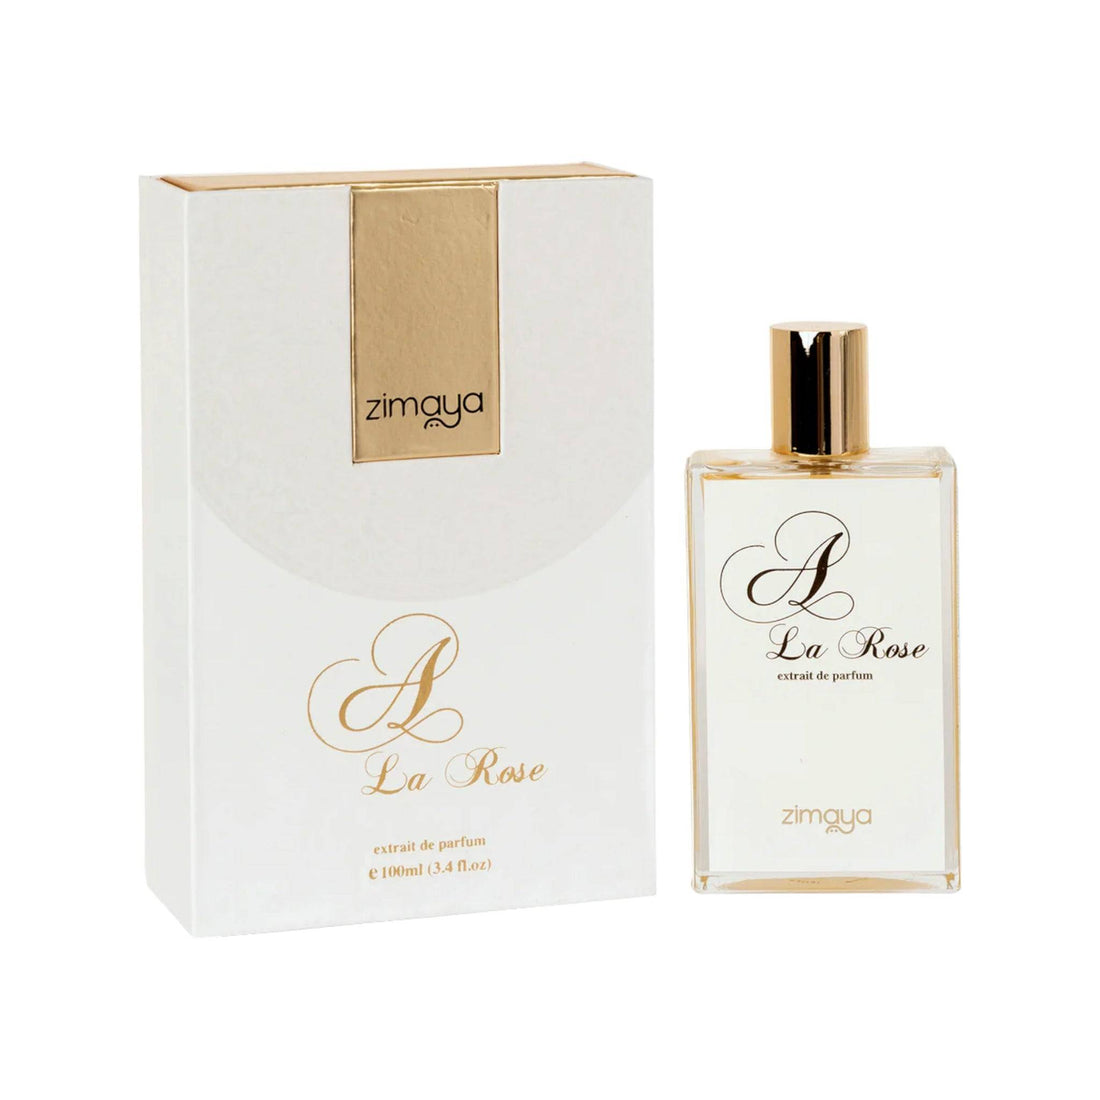 Elegant 100ml bottle of Zimaya A La Rose Extrait De Parfum, highlighting its luxurious and refined design.